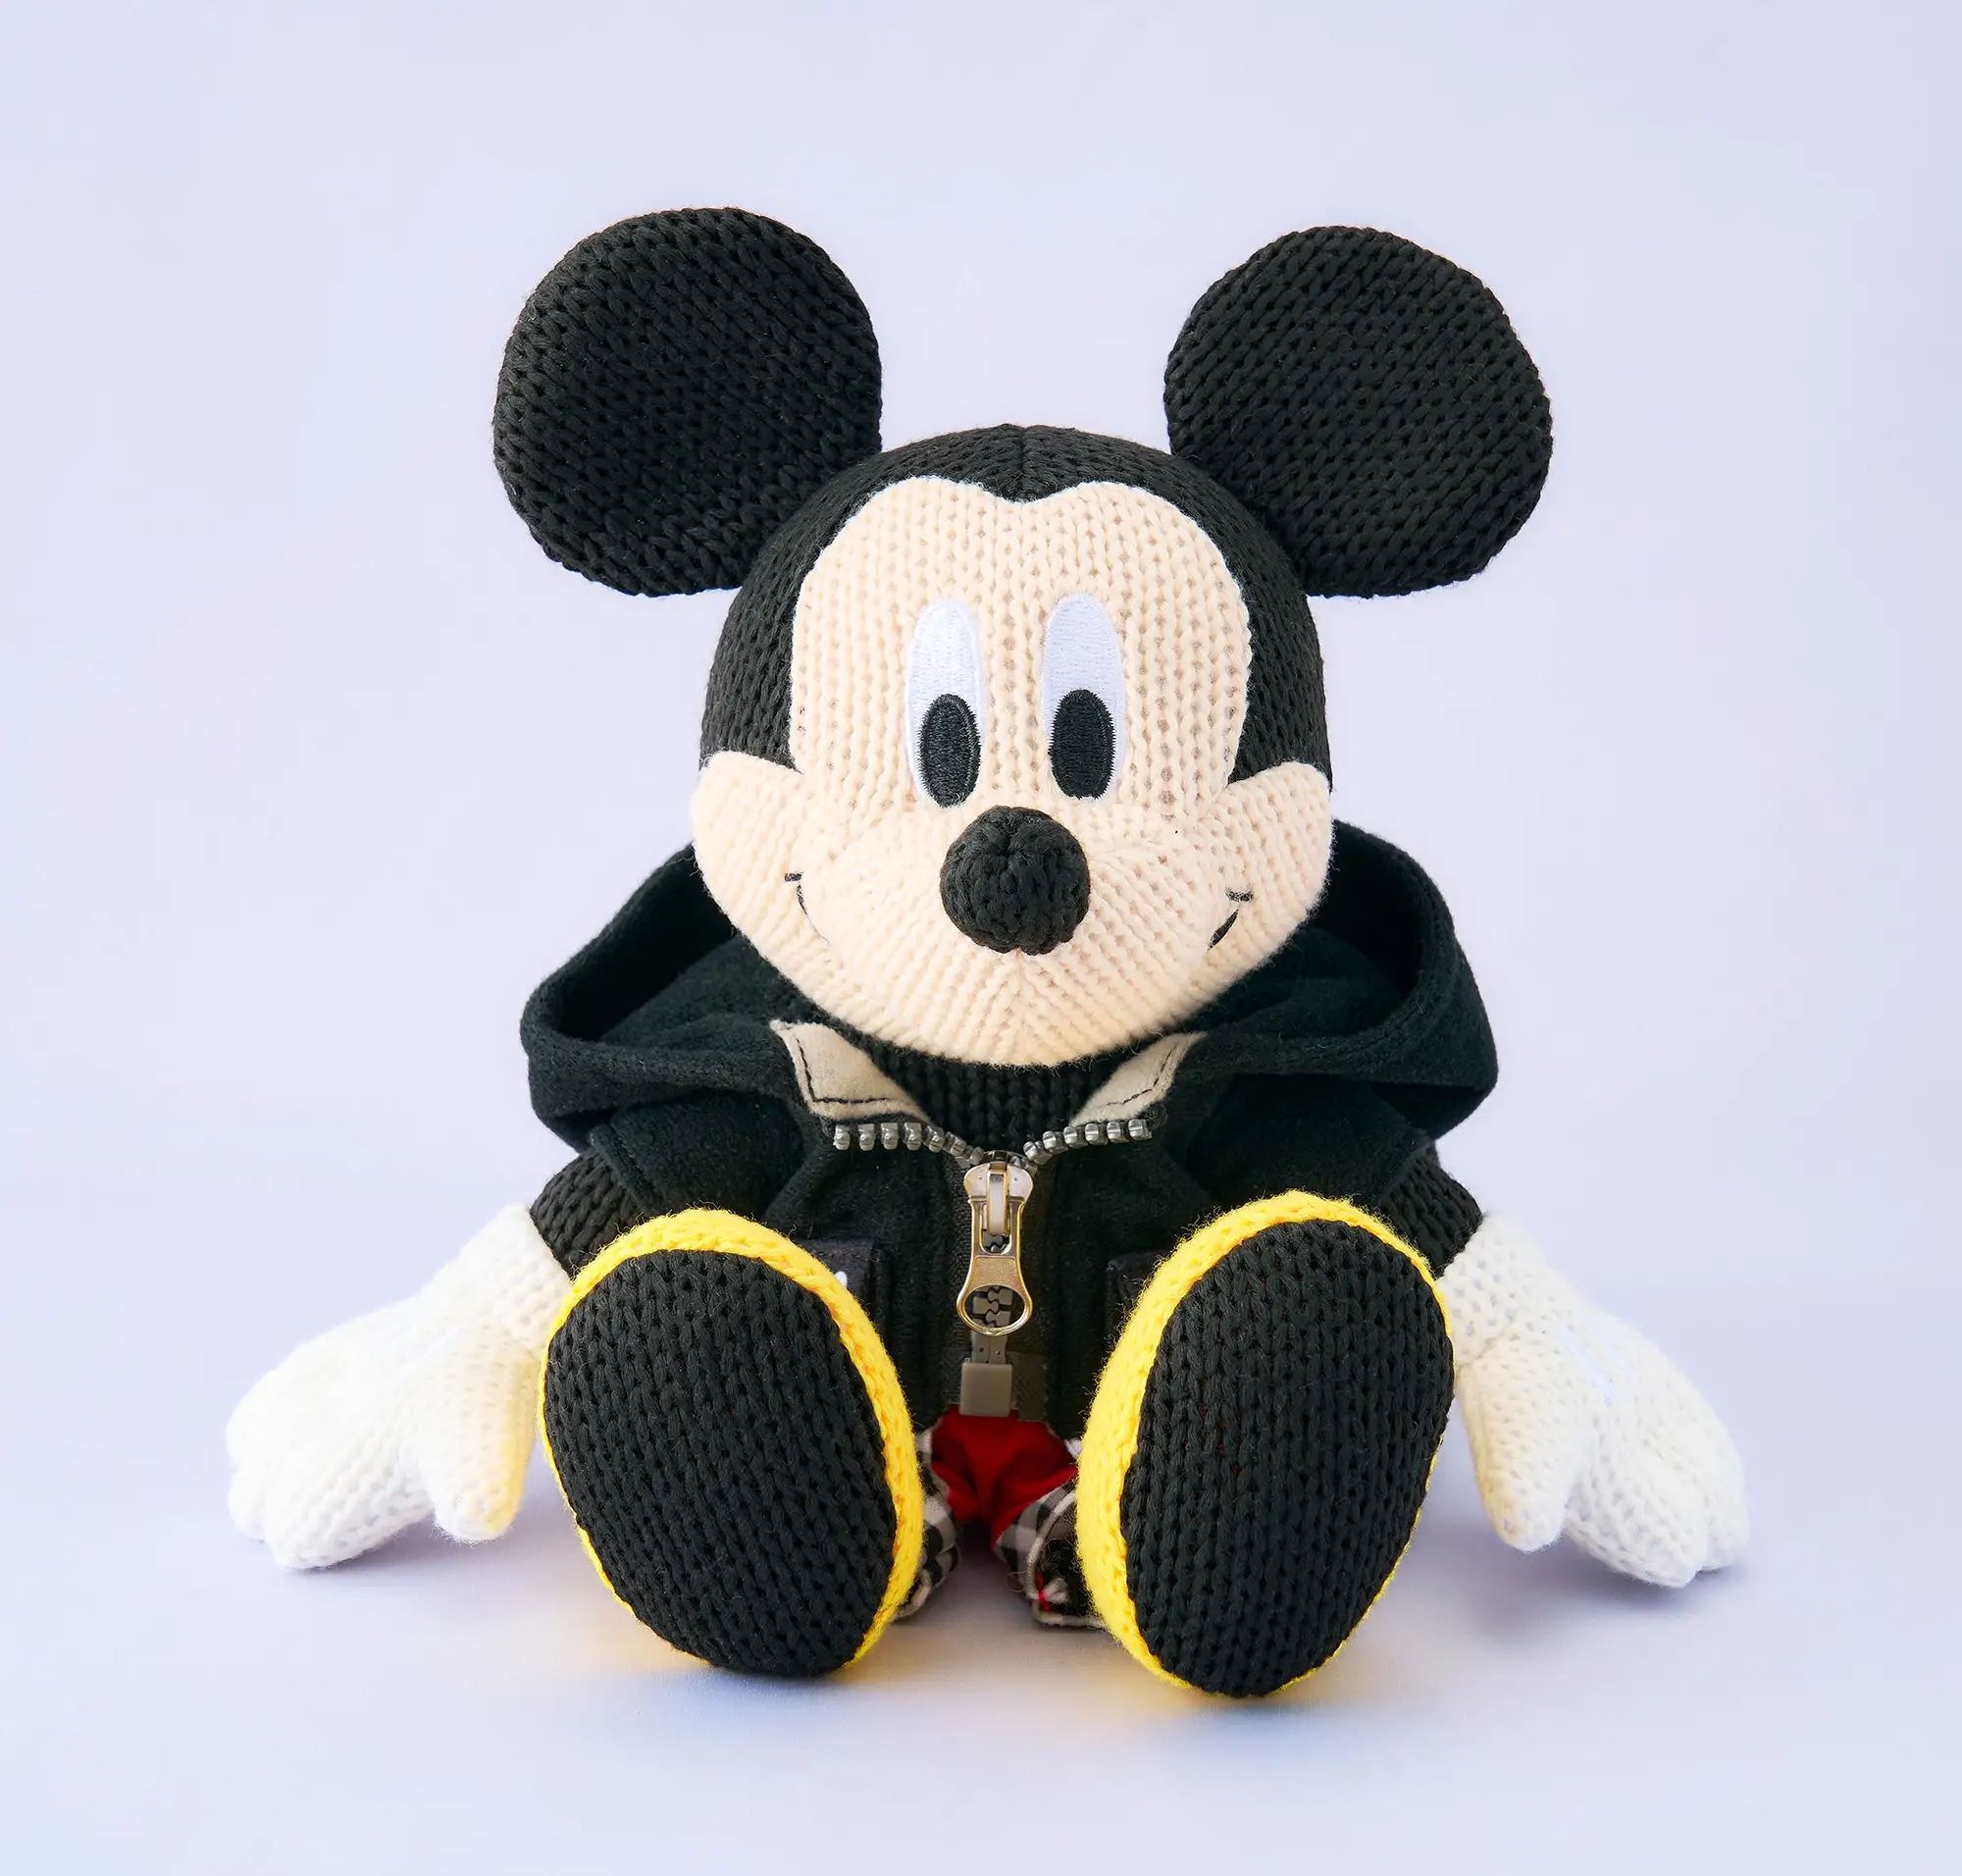 Kingdom Hearts III Knitted Plush King Mickey Square Enix